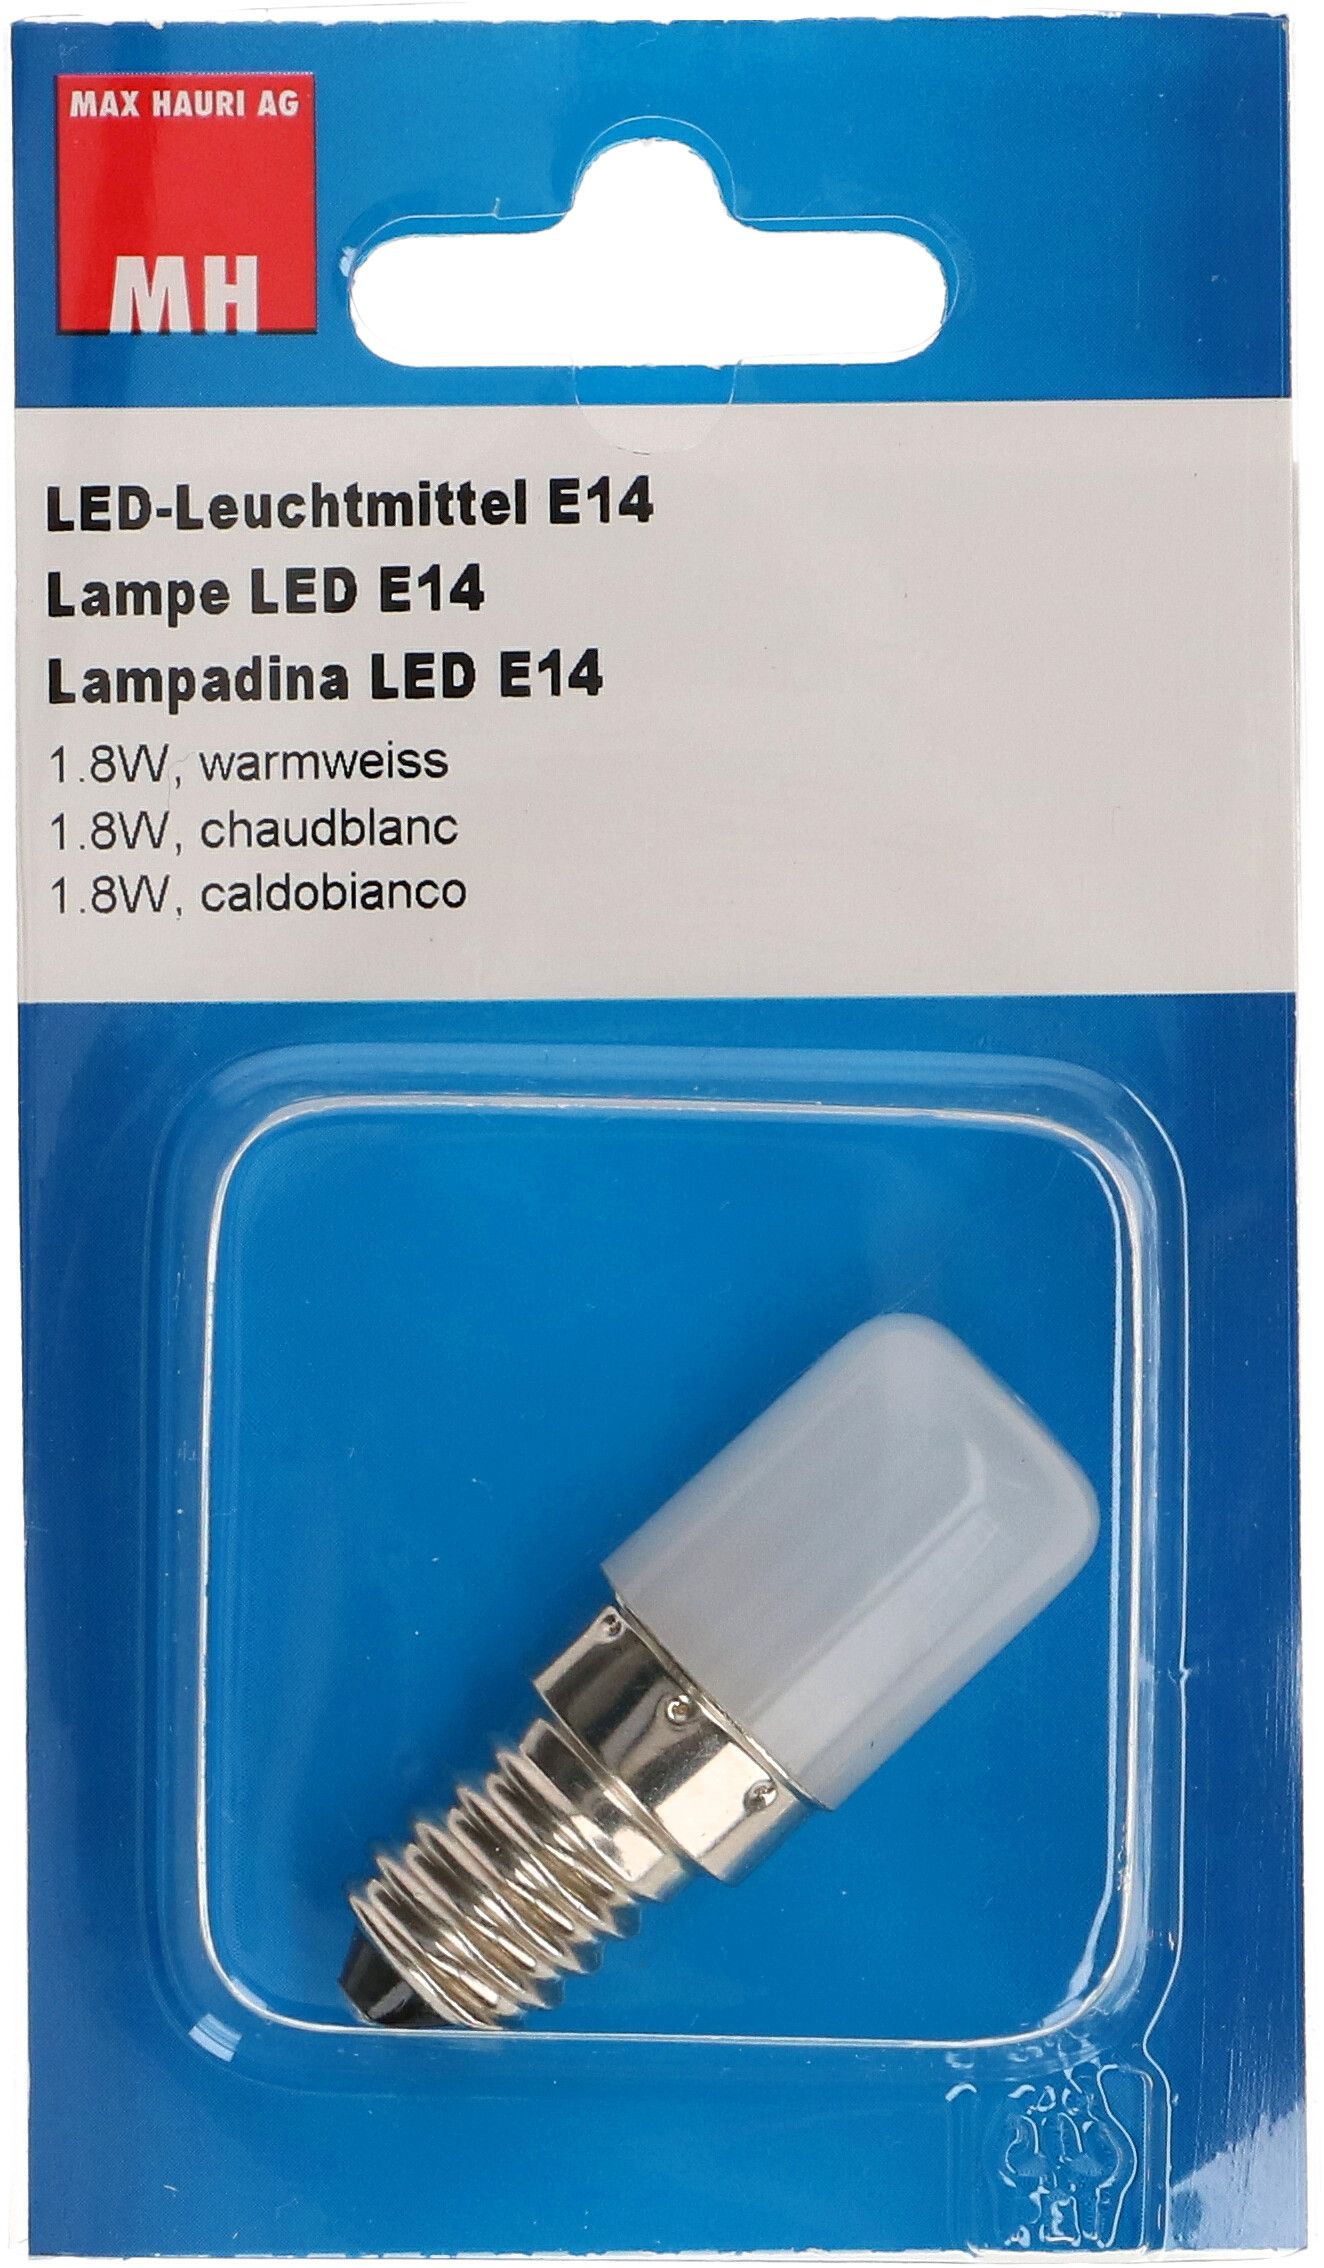 LED-Leuchtmittel E14 1.8W - MAX HAURI AG